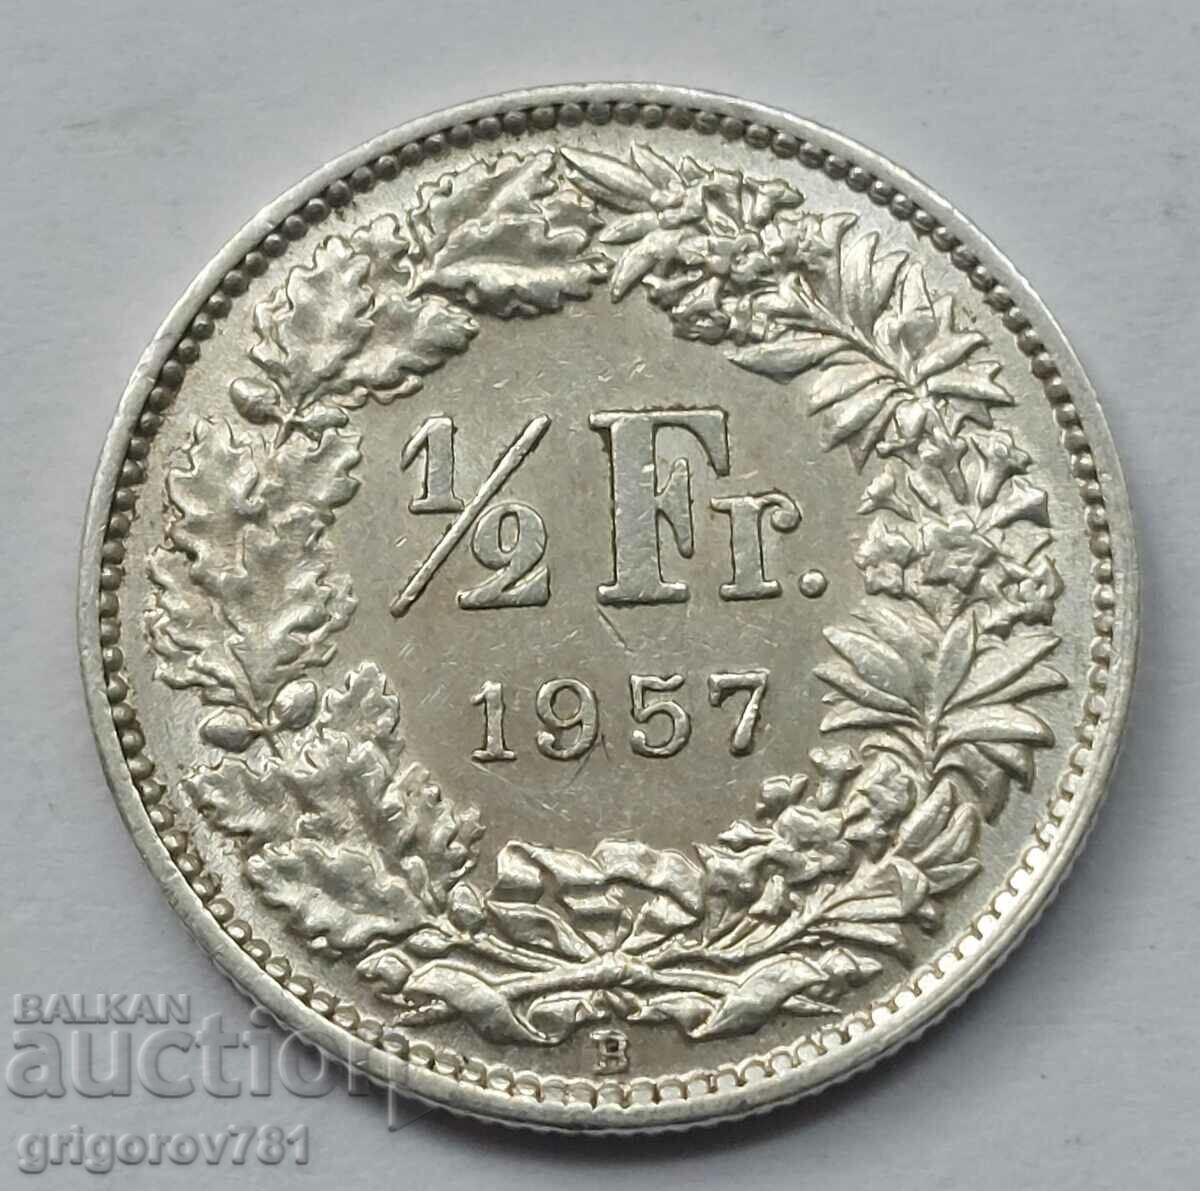 1/2 Franc Silver Switzerland 1957 B - Silver Coin #139